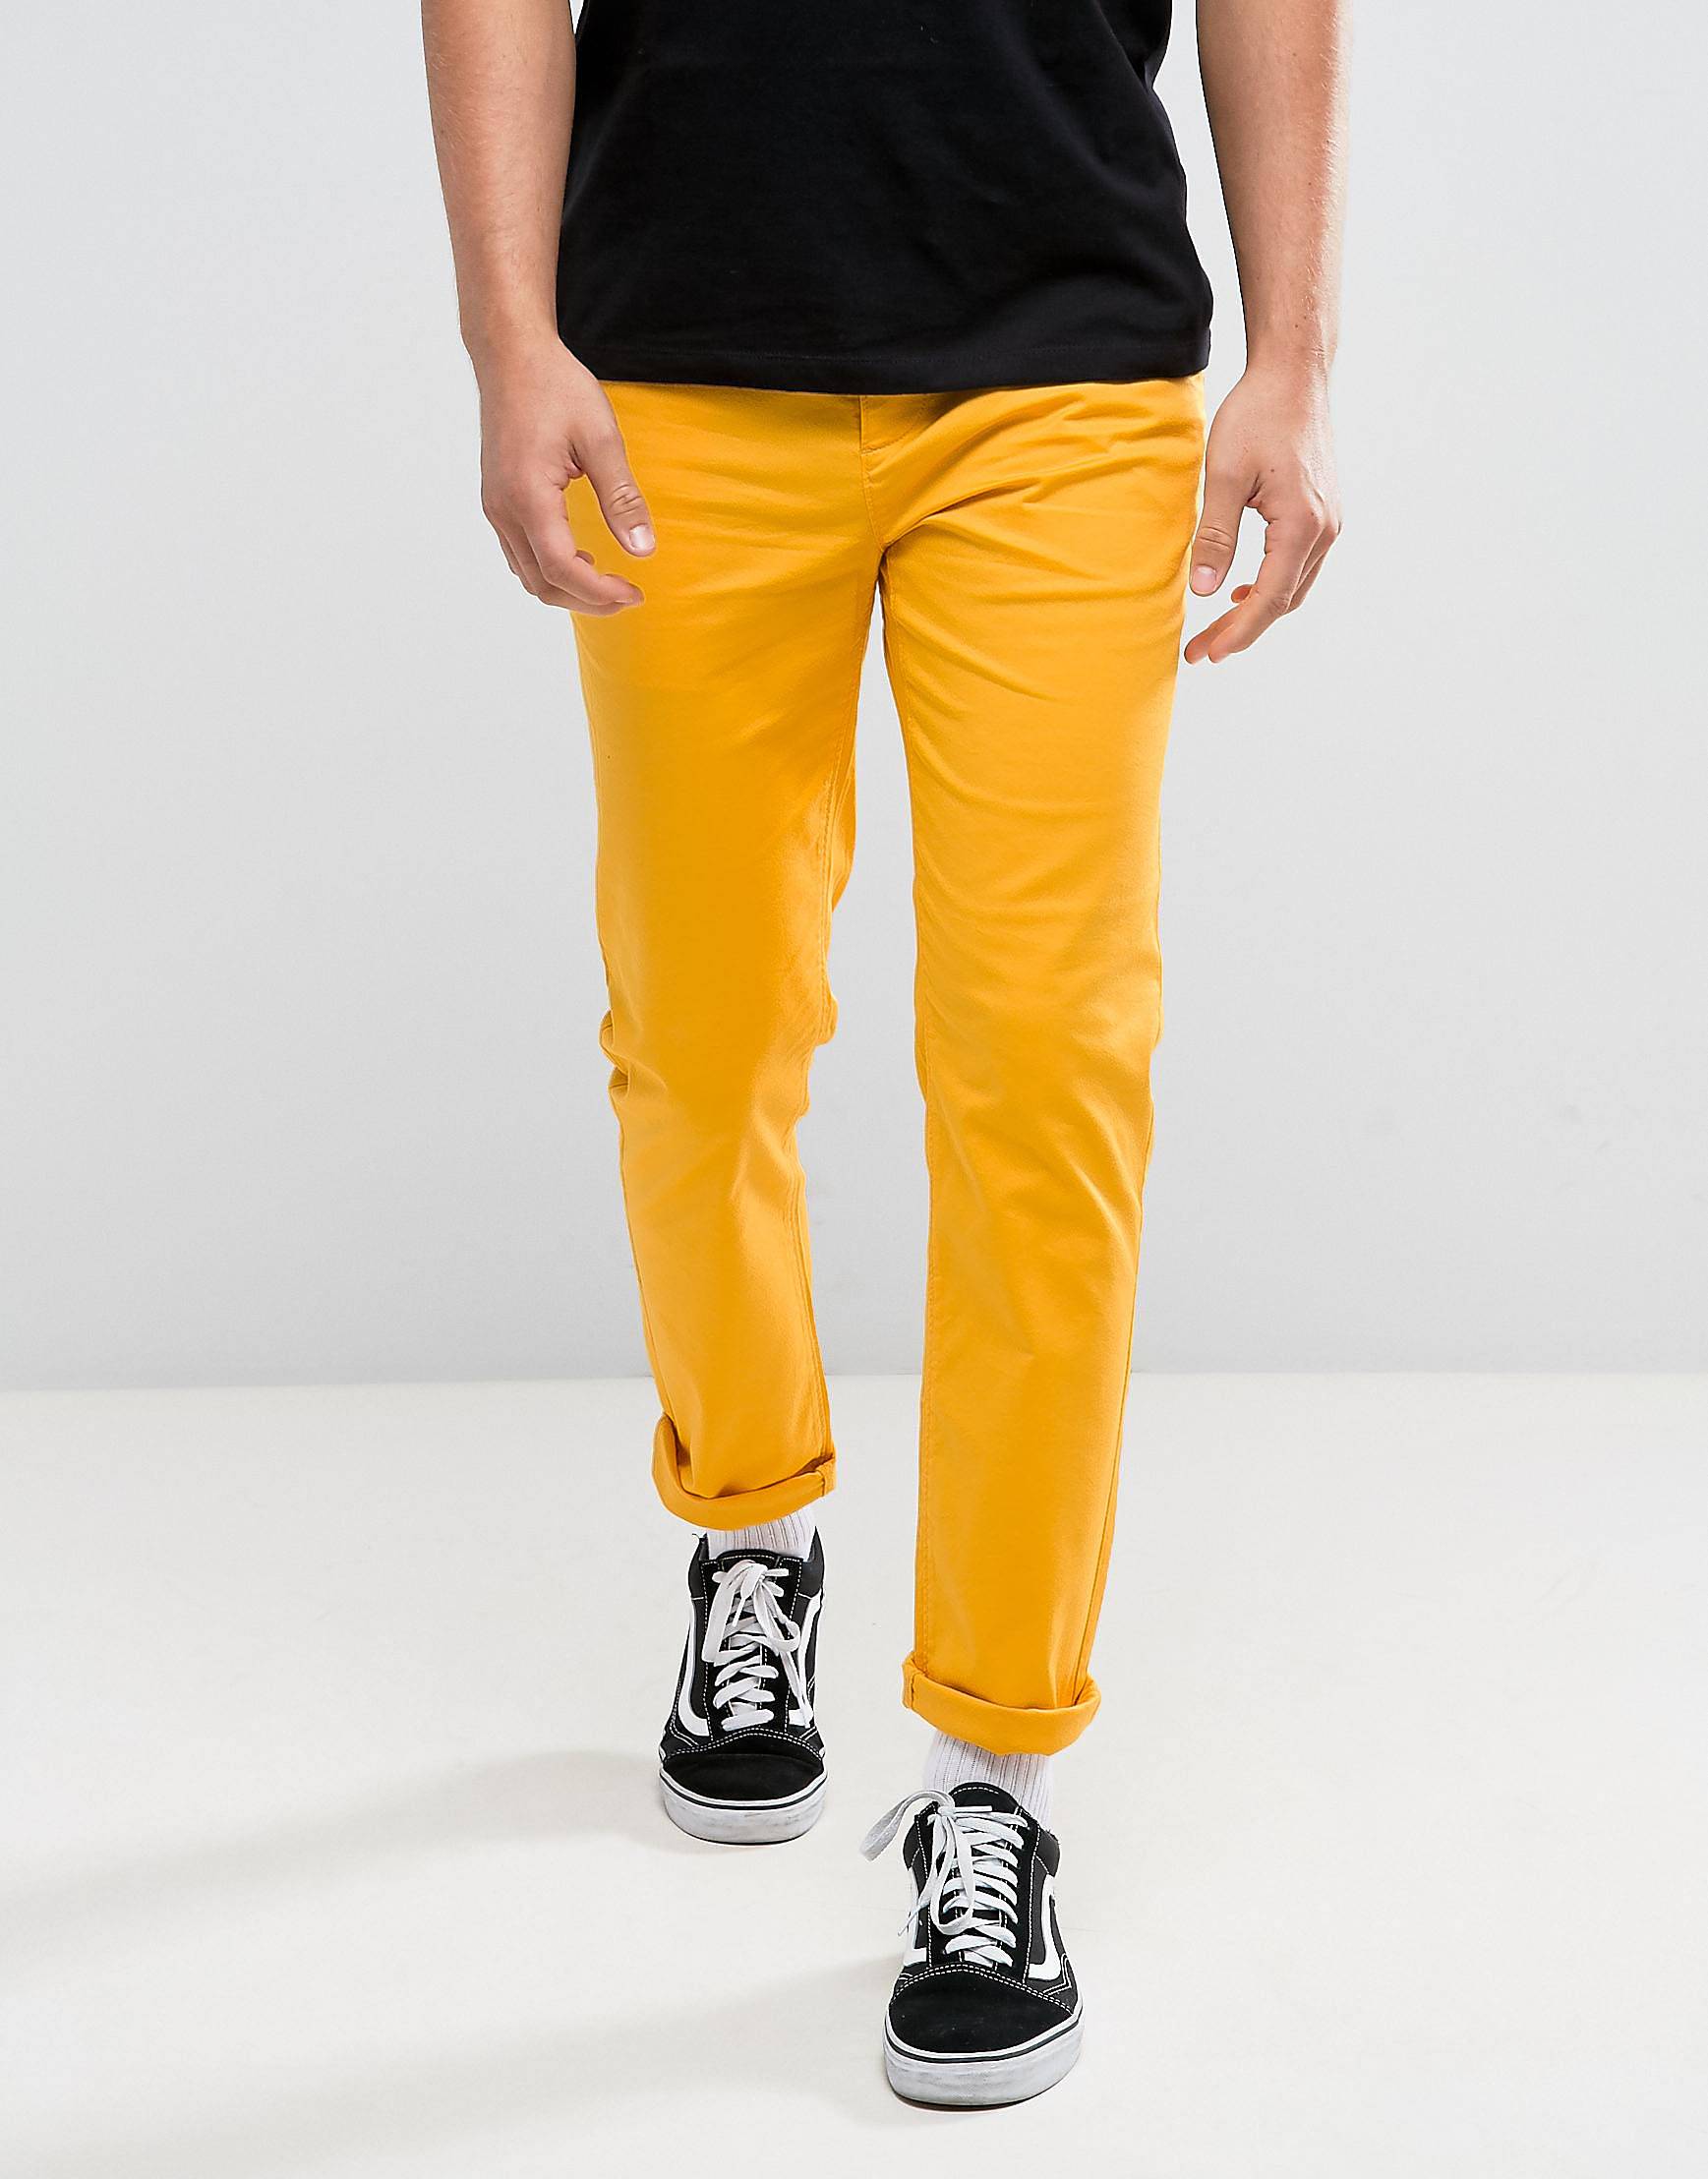 Желтые штаны мужские. Желтые брюки мужские. Жёлтые джинсы мужские. Желтые чиносы мужские.